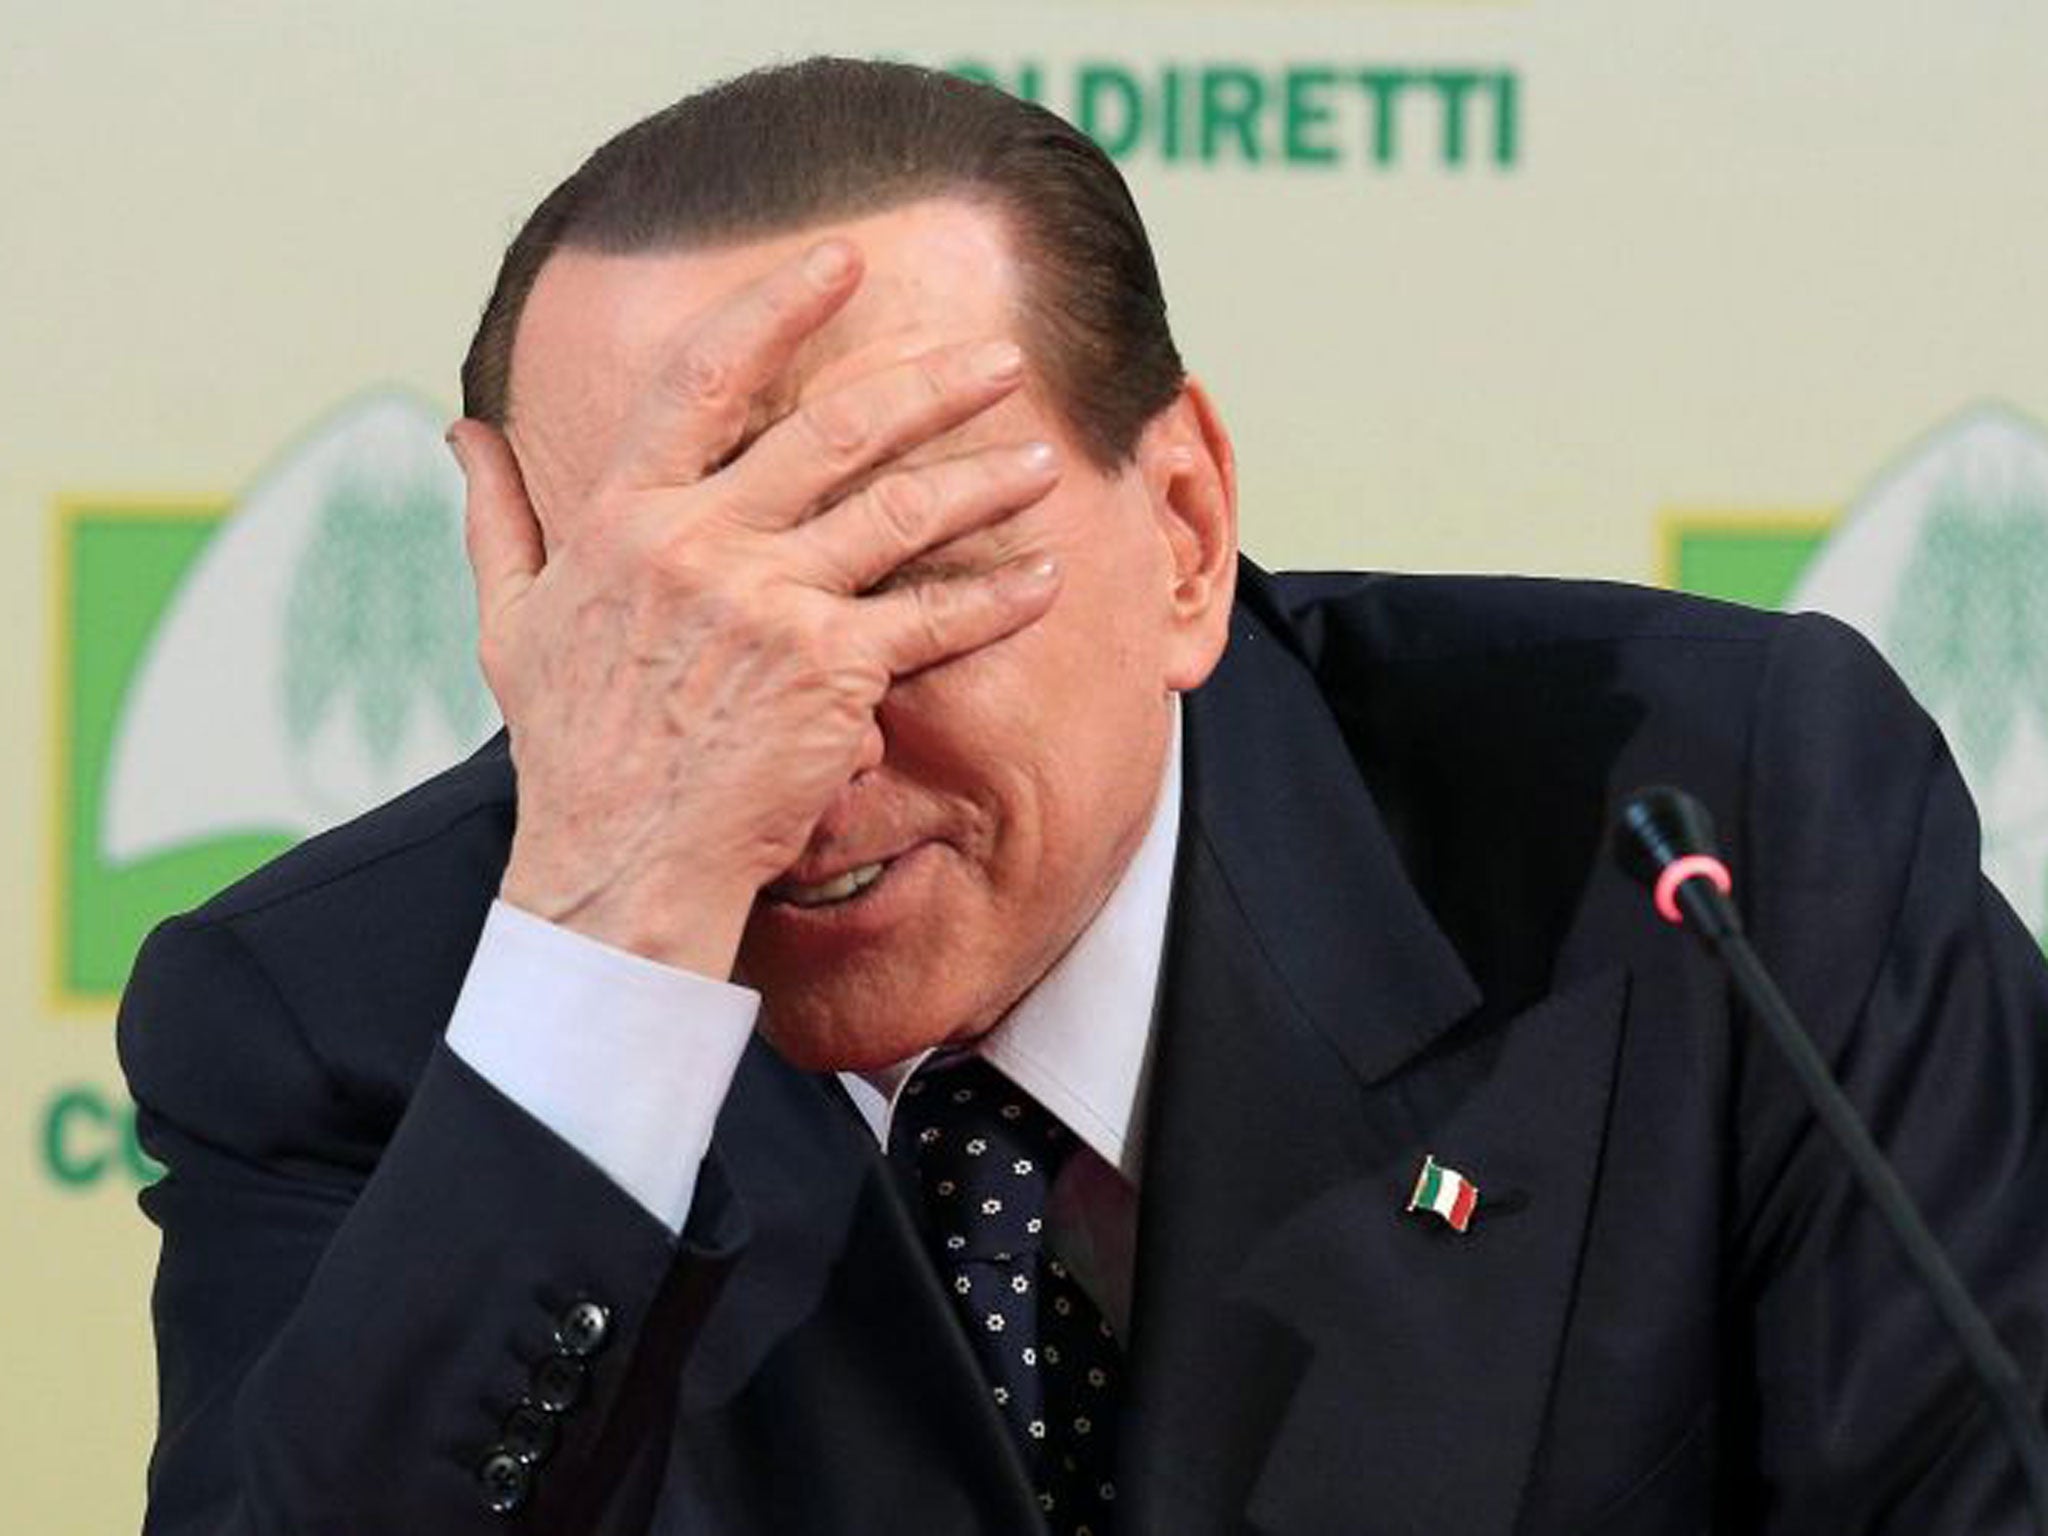 Silvio Berlusconi on the campaign trail in Rome yesterday